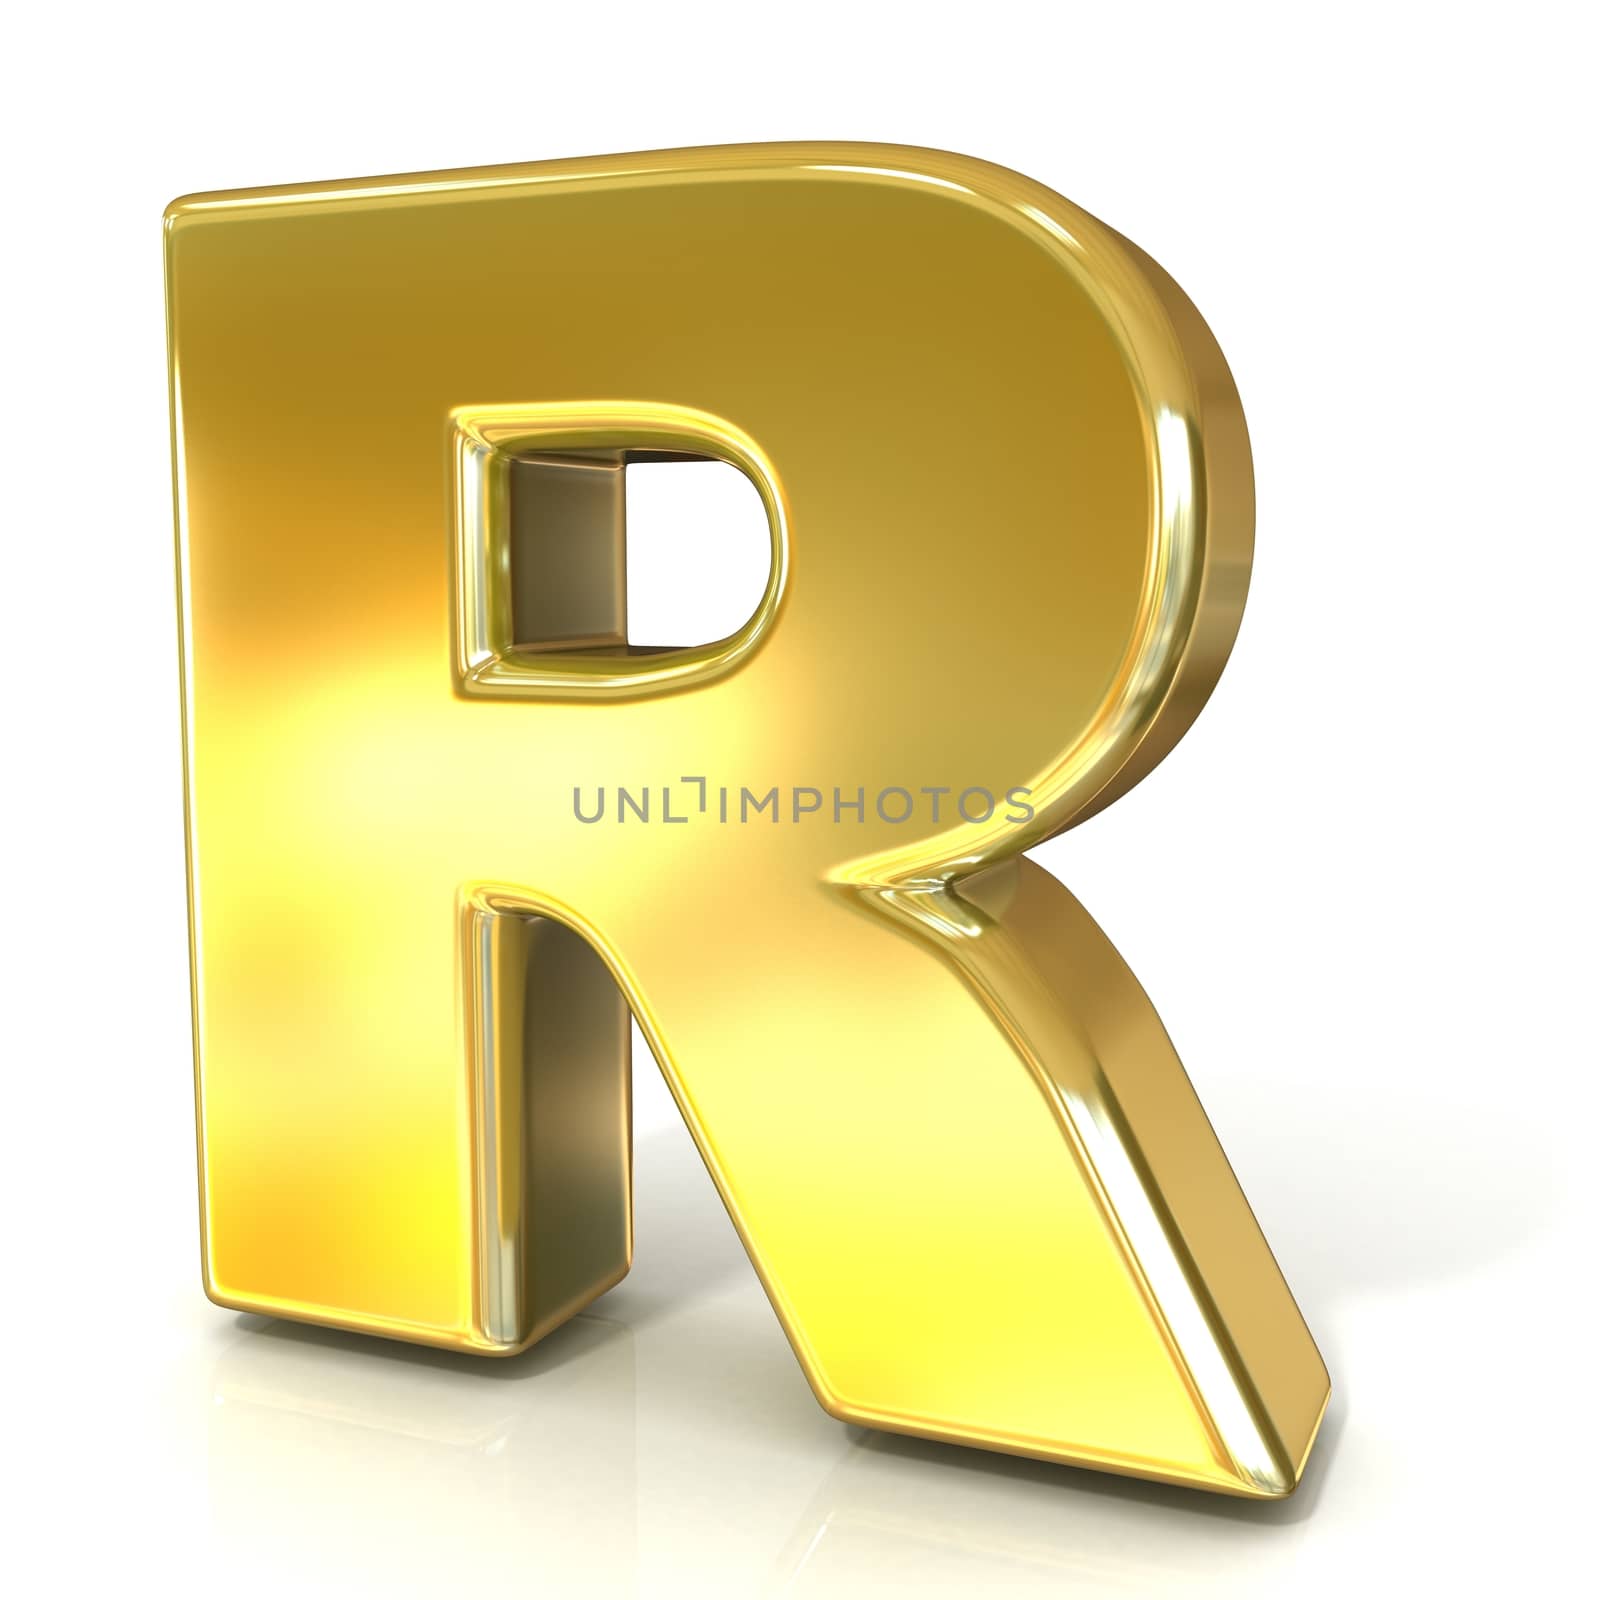 Golden font collection letter - R. 3D render illustration, isolated on white background.